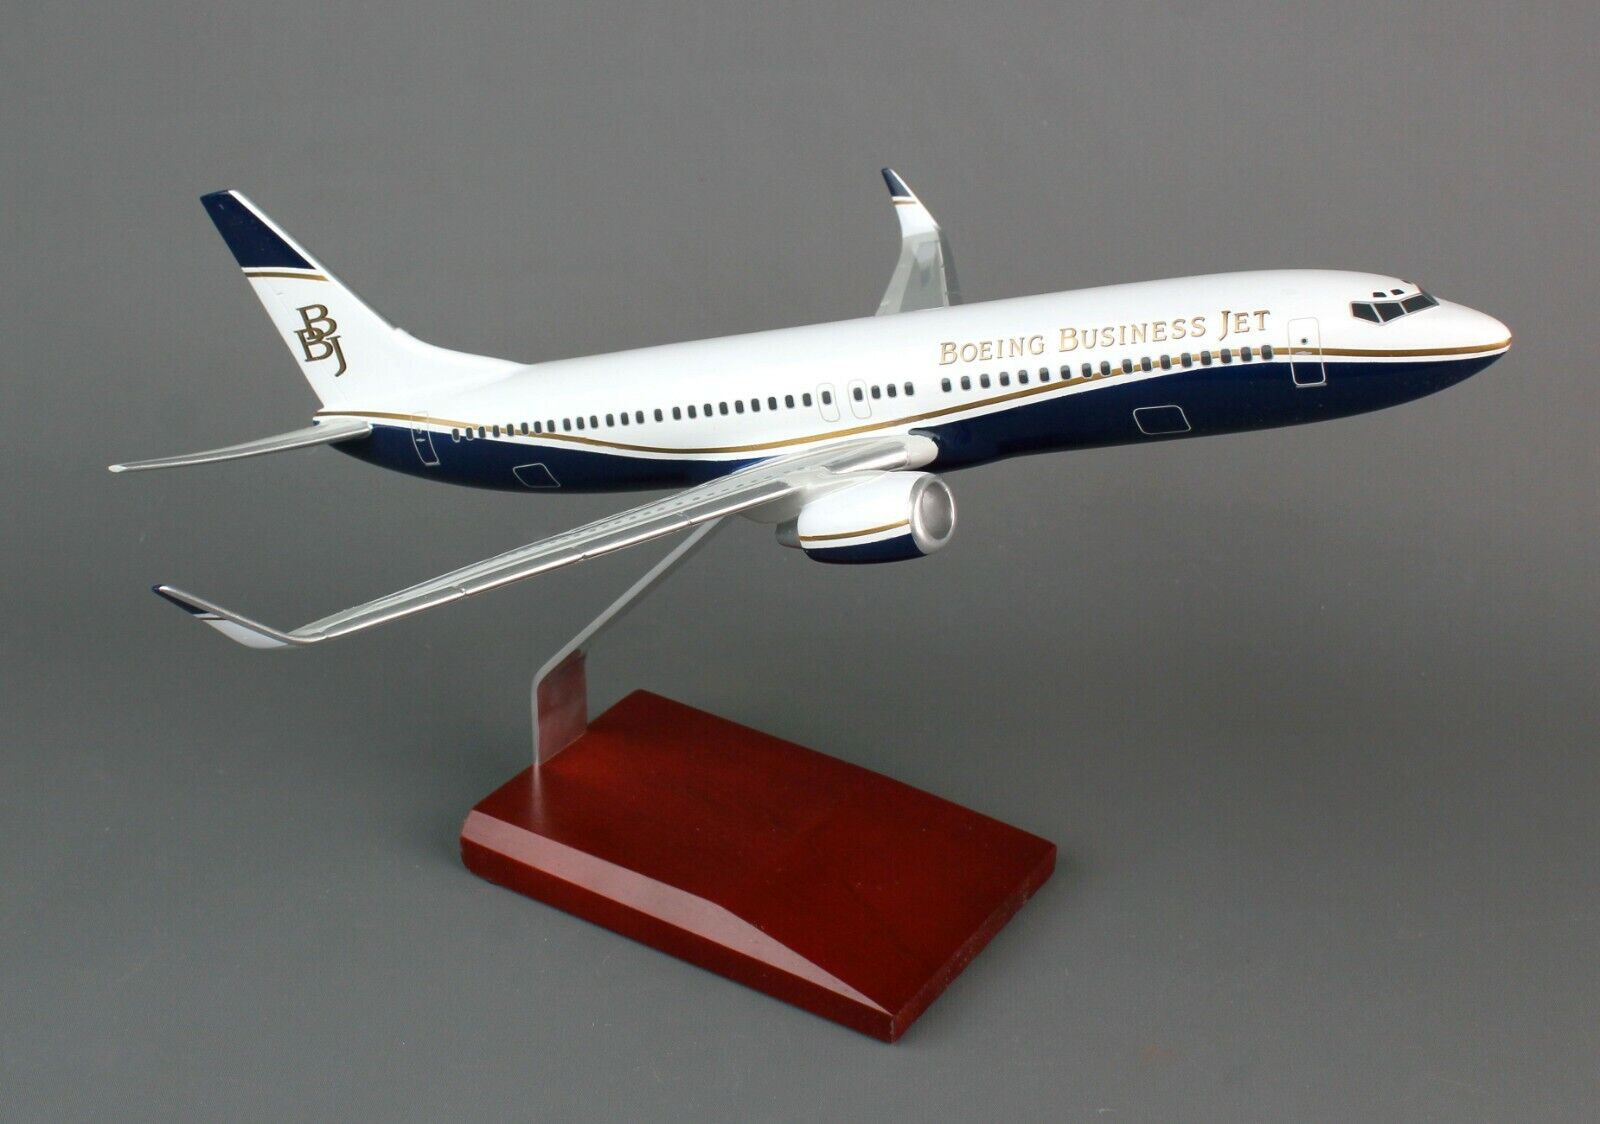 Boeing 737-800 Business Jet Desk Top Display Corporate Model 1/100 ES Airplane